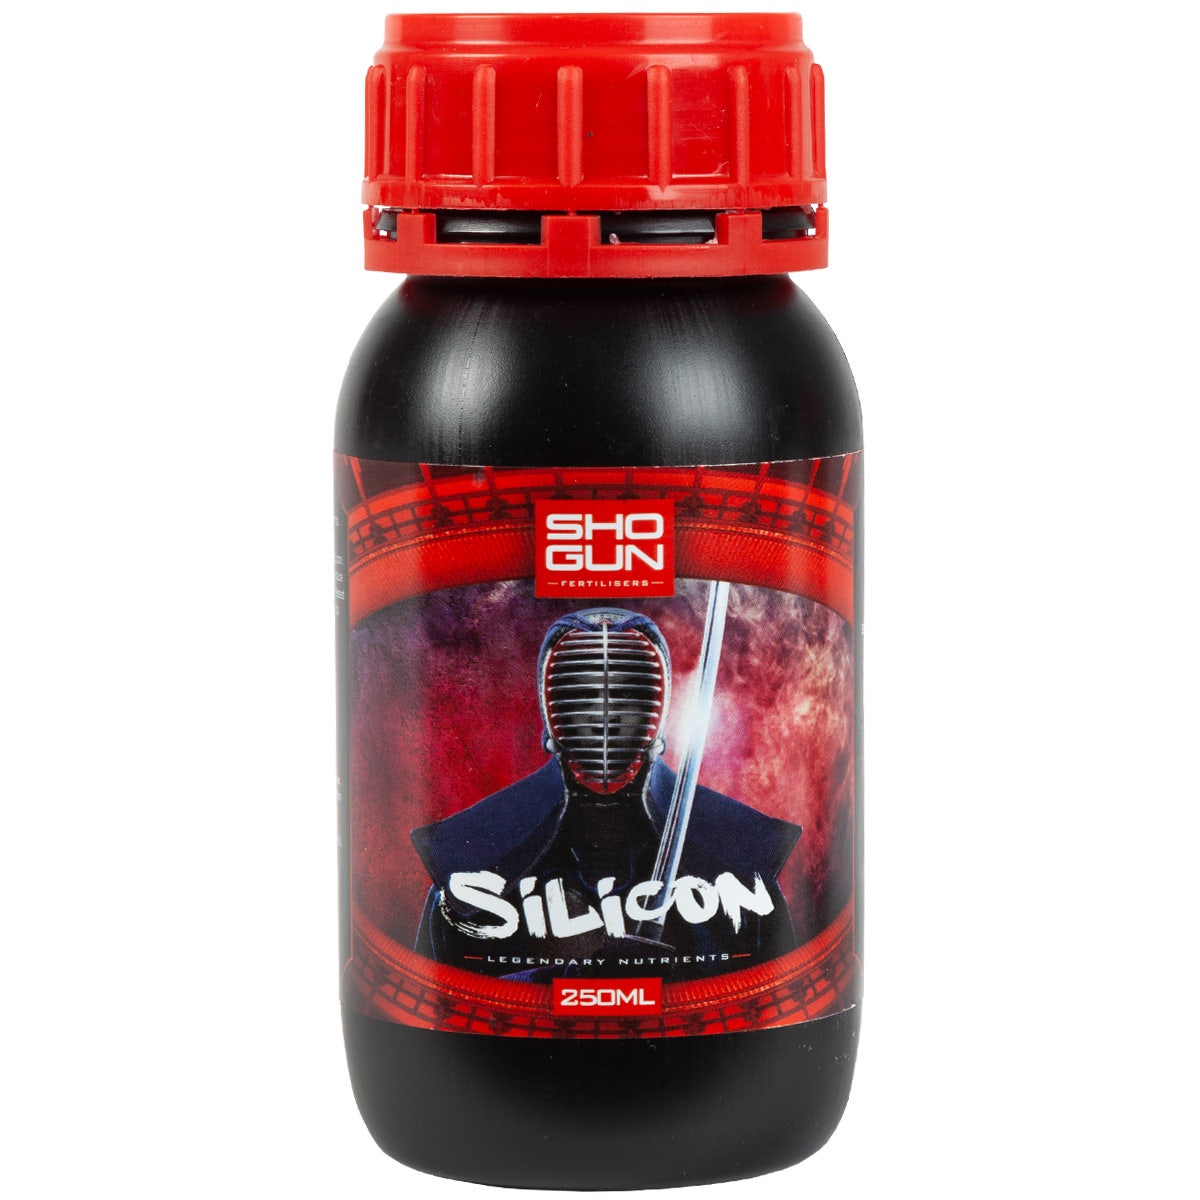 Shogun Fertilisers - Silicon